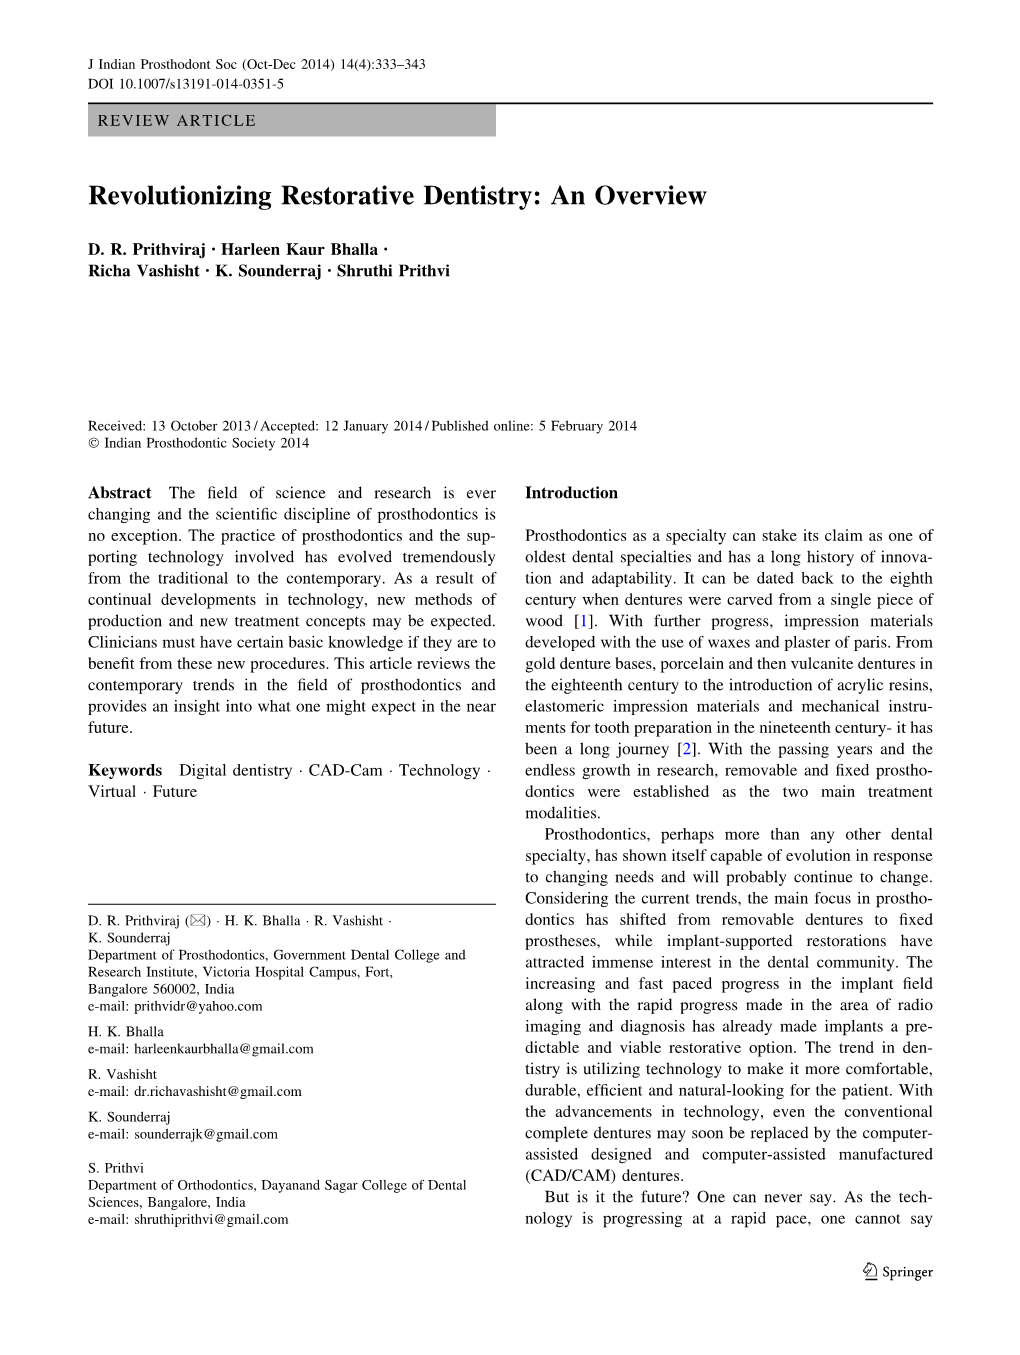 Revolutionizing Restorative Dentistry: an Overview